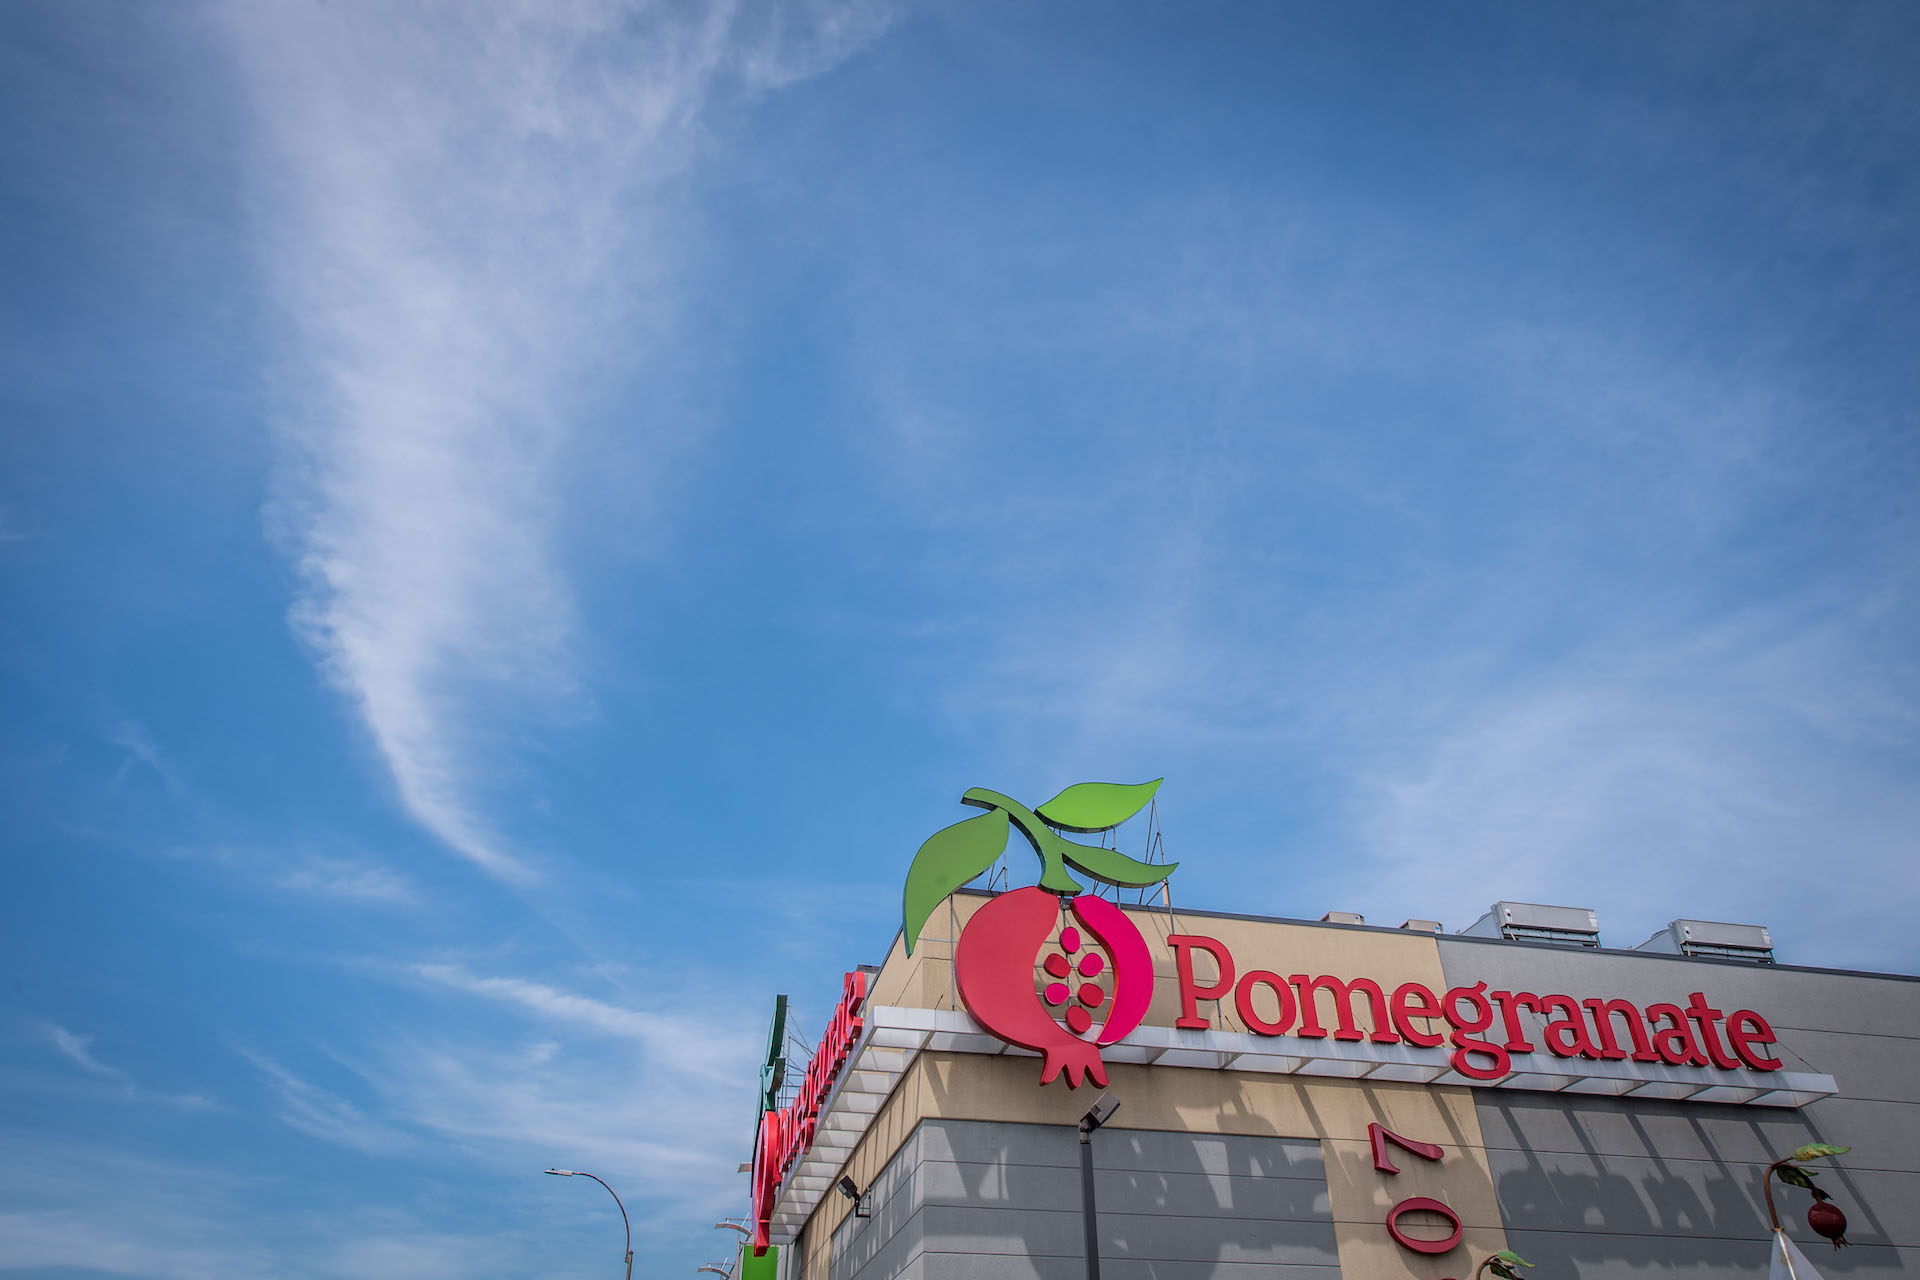 Pomegranate store near The VItagraph apartments in New York near Brooklyn